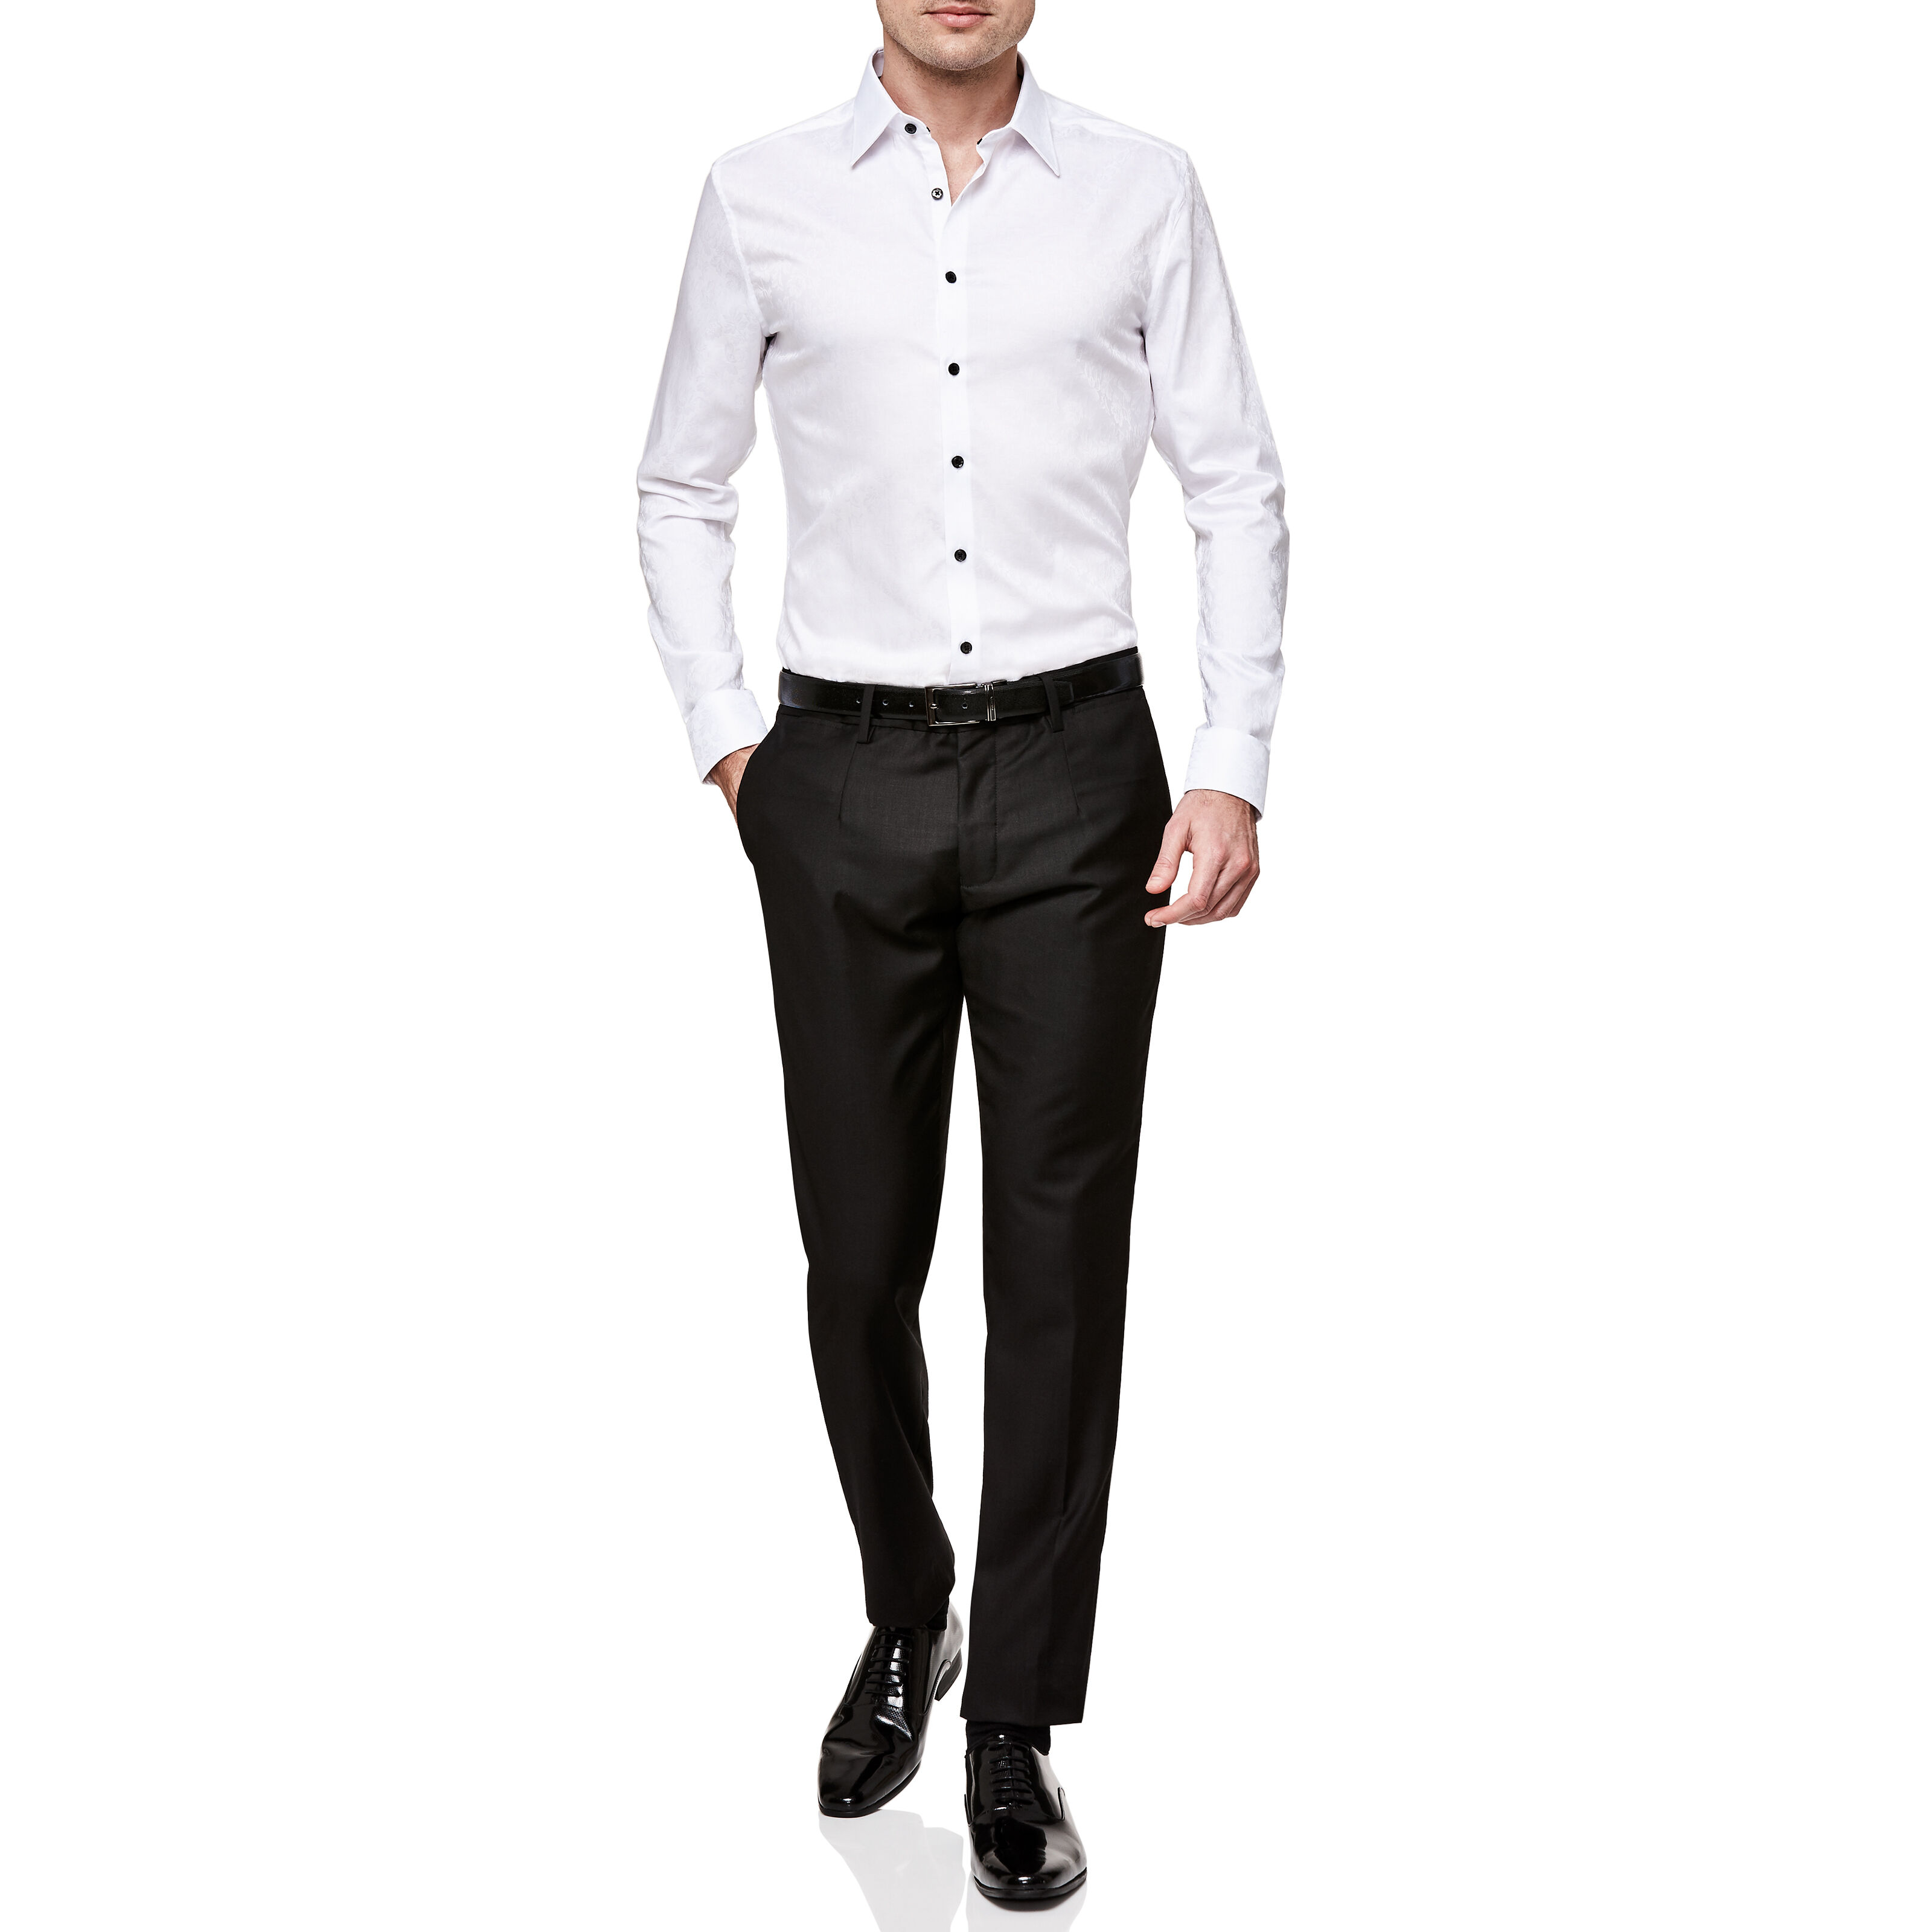 Men's Blue Blazer, White Dress Shirt, Black Dress Pants, Black Knit Tie |  Lookastic